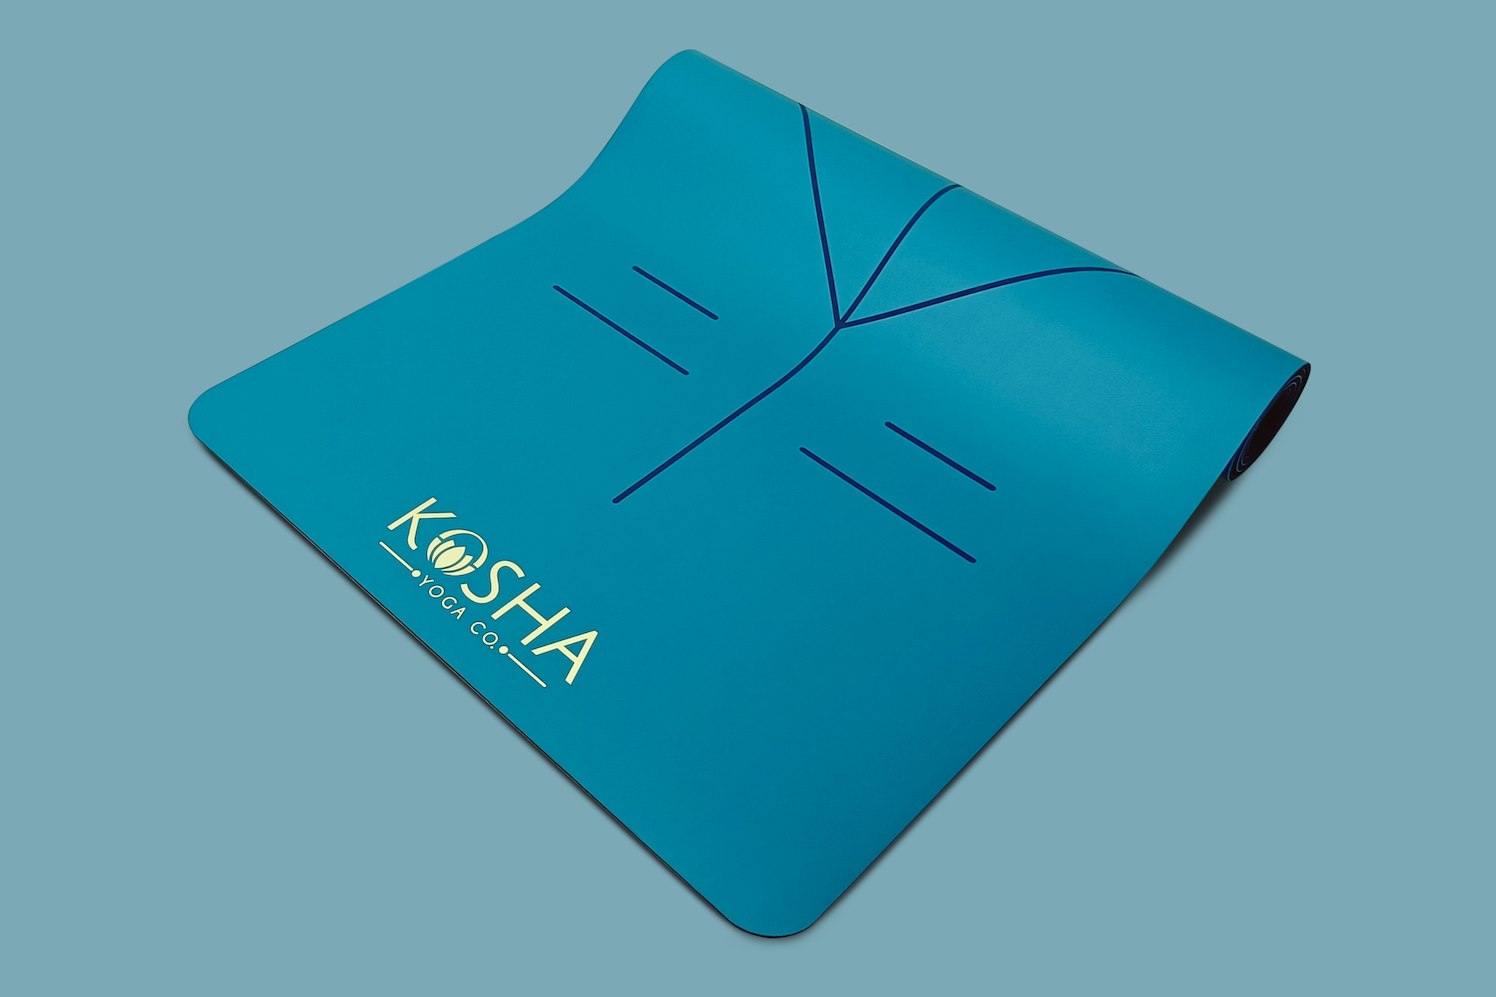 Buy Eco Friendly Yoga Mat Online  Kosha Yoga Co – Kosha Yoga Co.